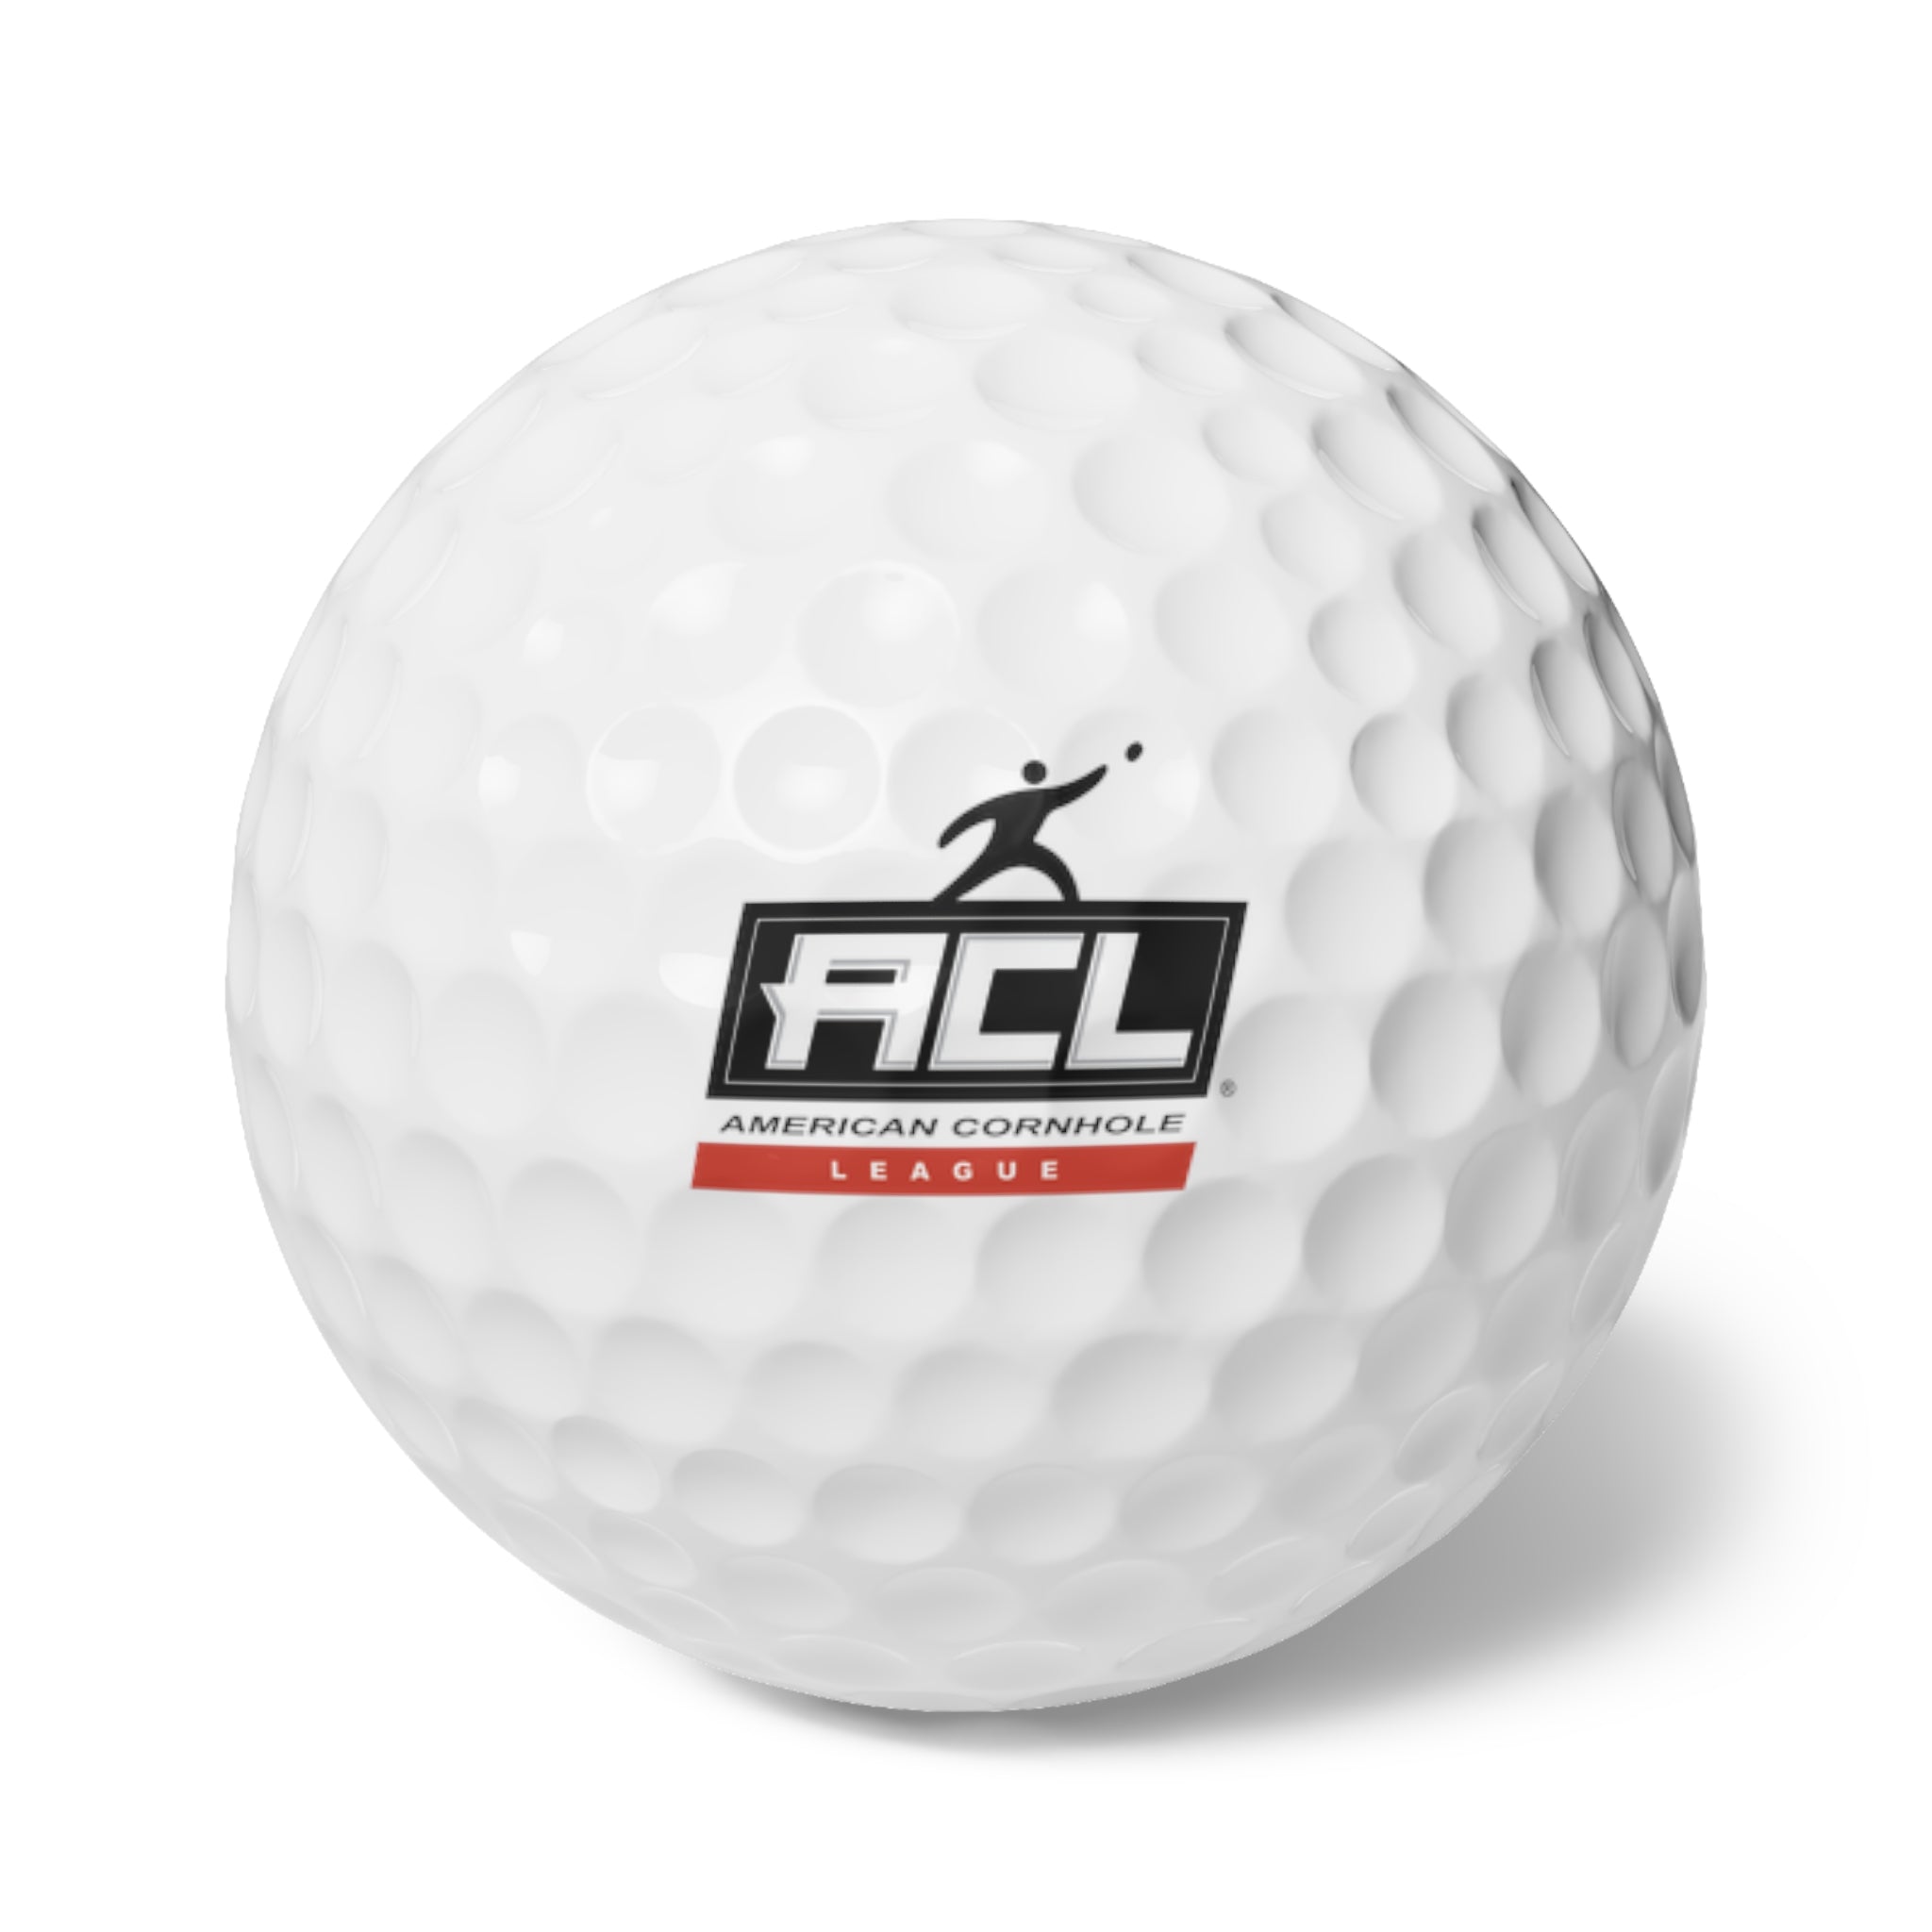 ACL Golf Balls, 6pcs